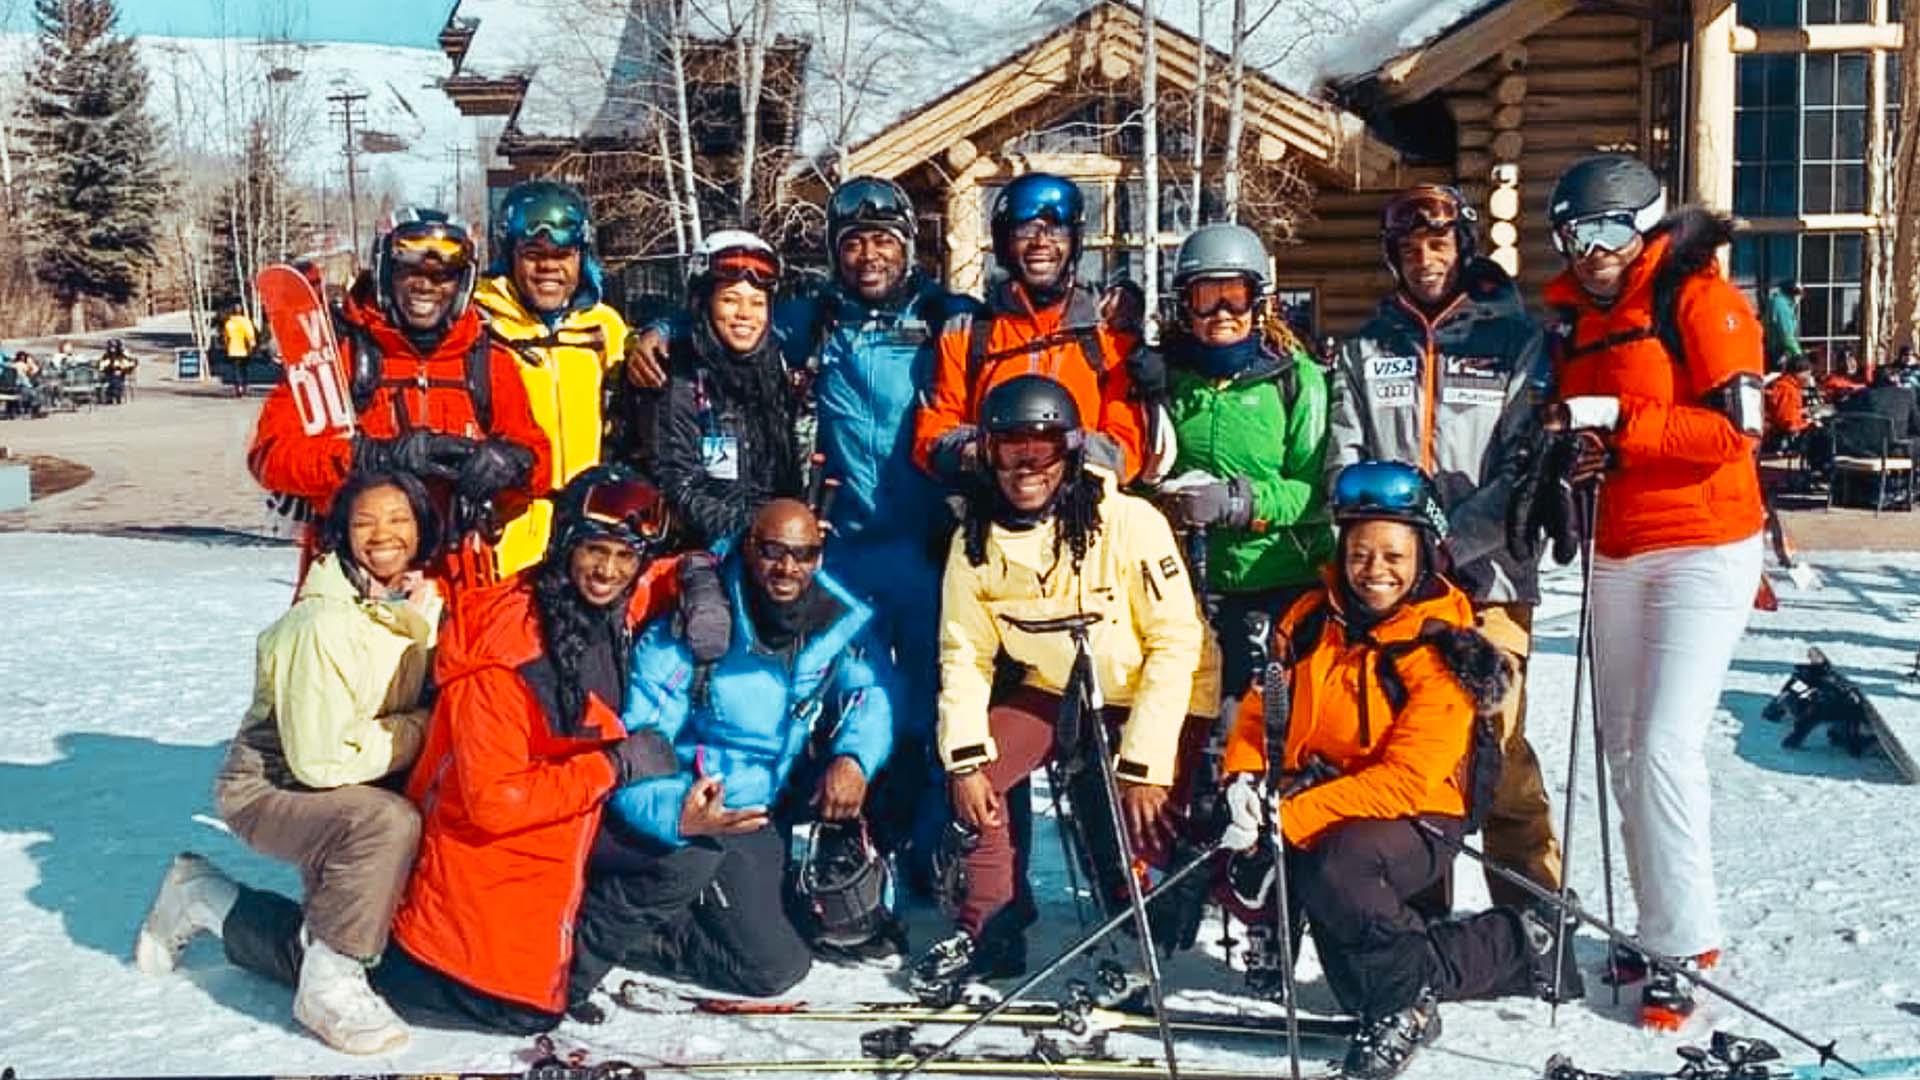 National Brotherhood of Skiers